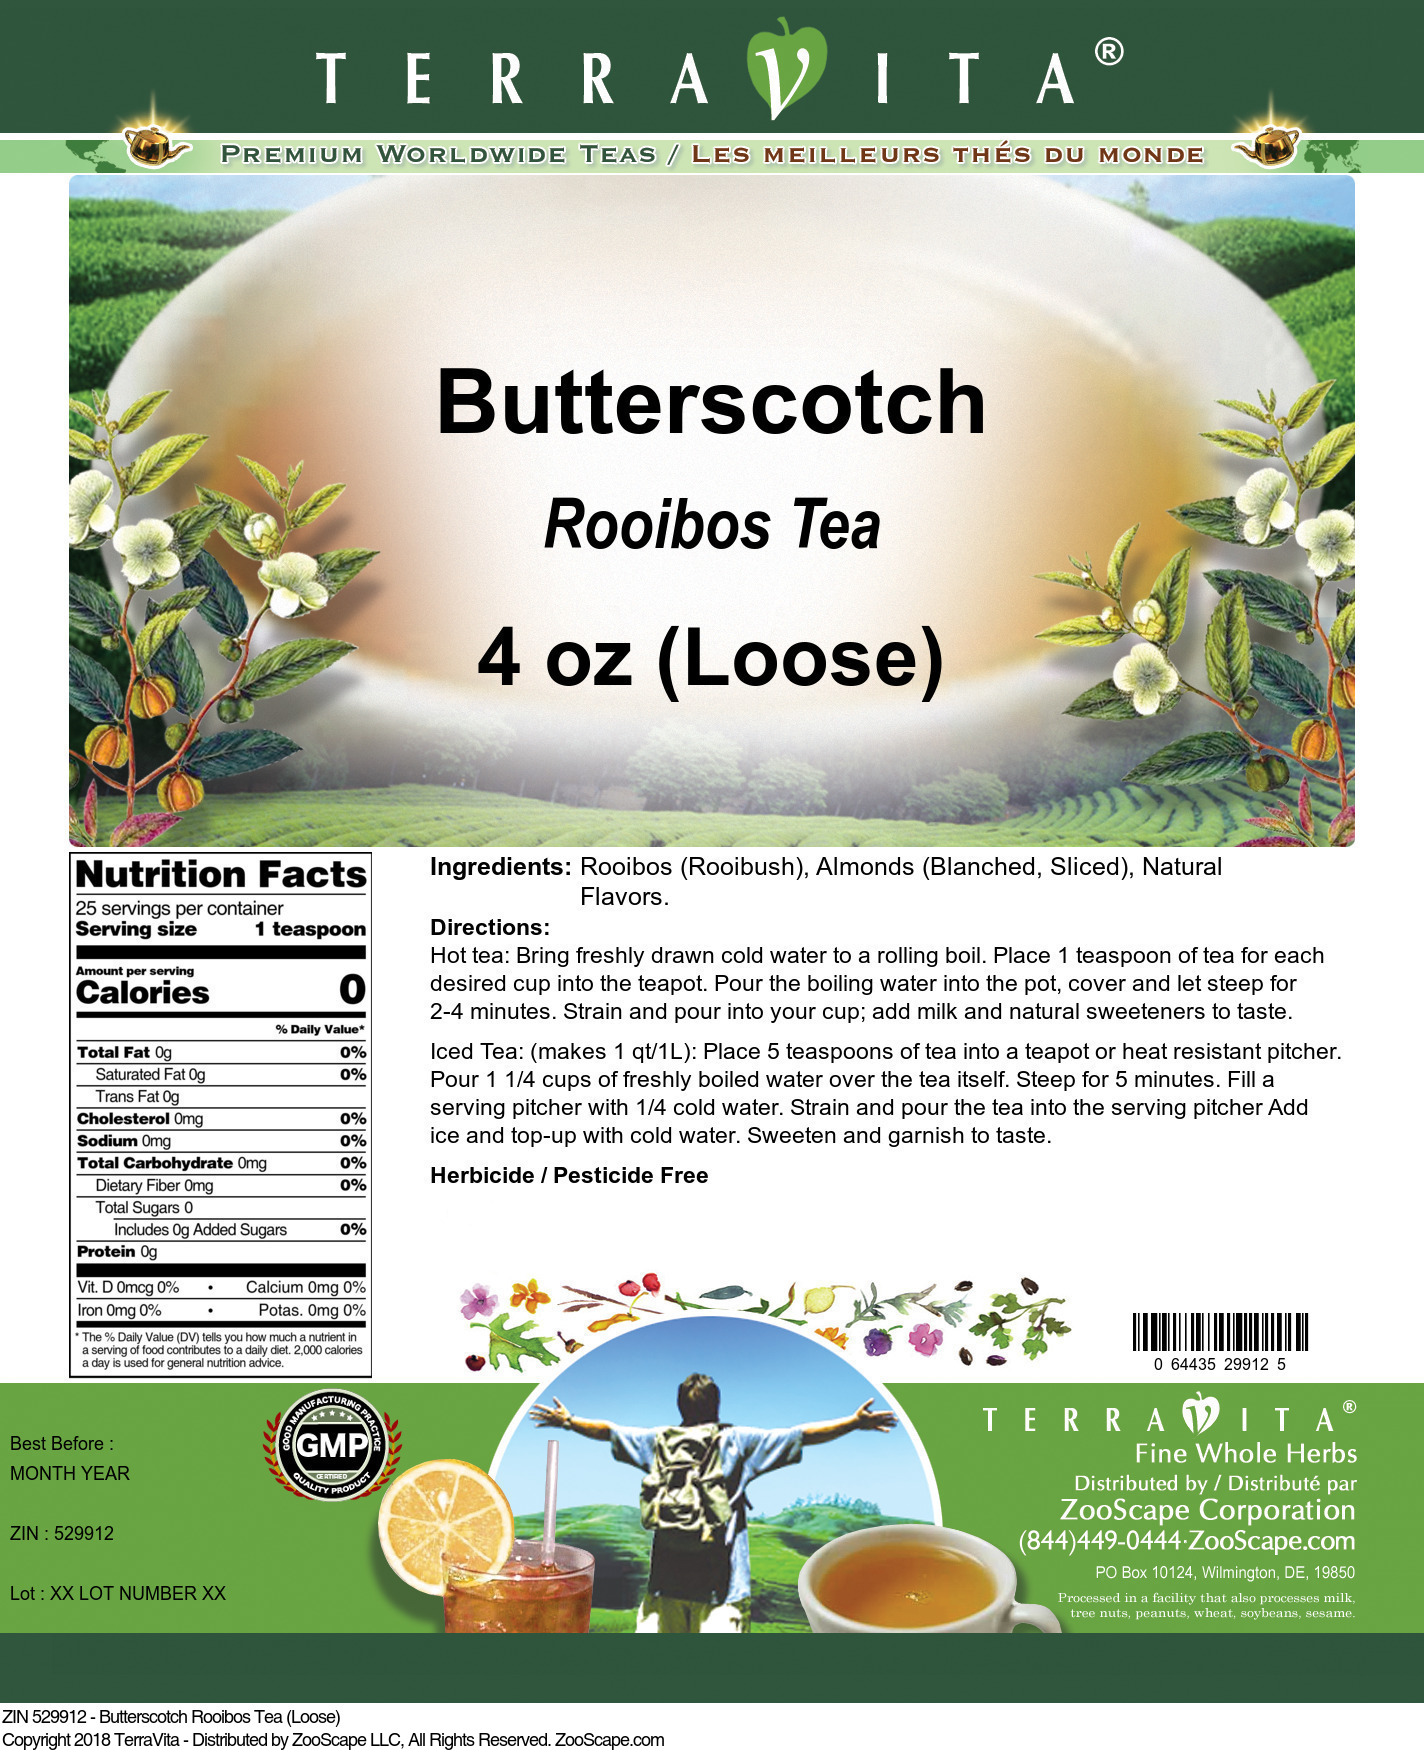 Butterscotch Rooibos Tea (Loose) - Label